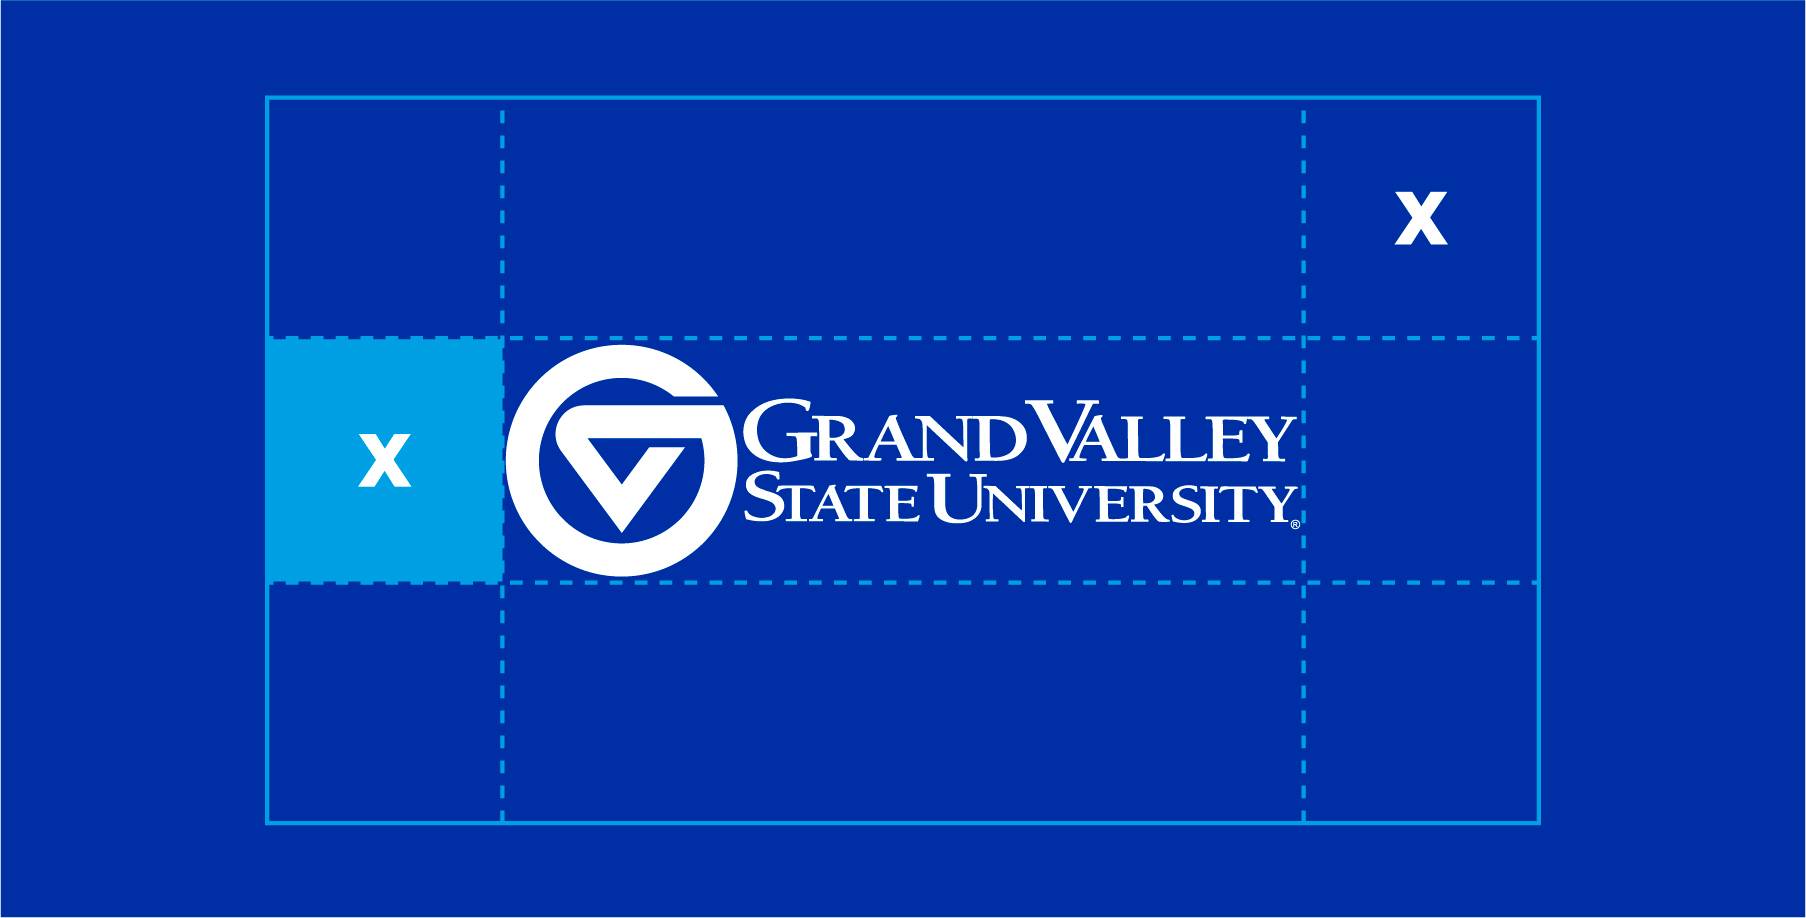 Grand Valley markleft logo